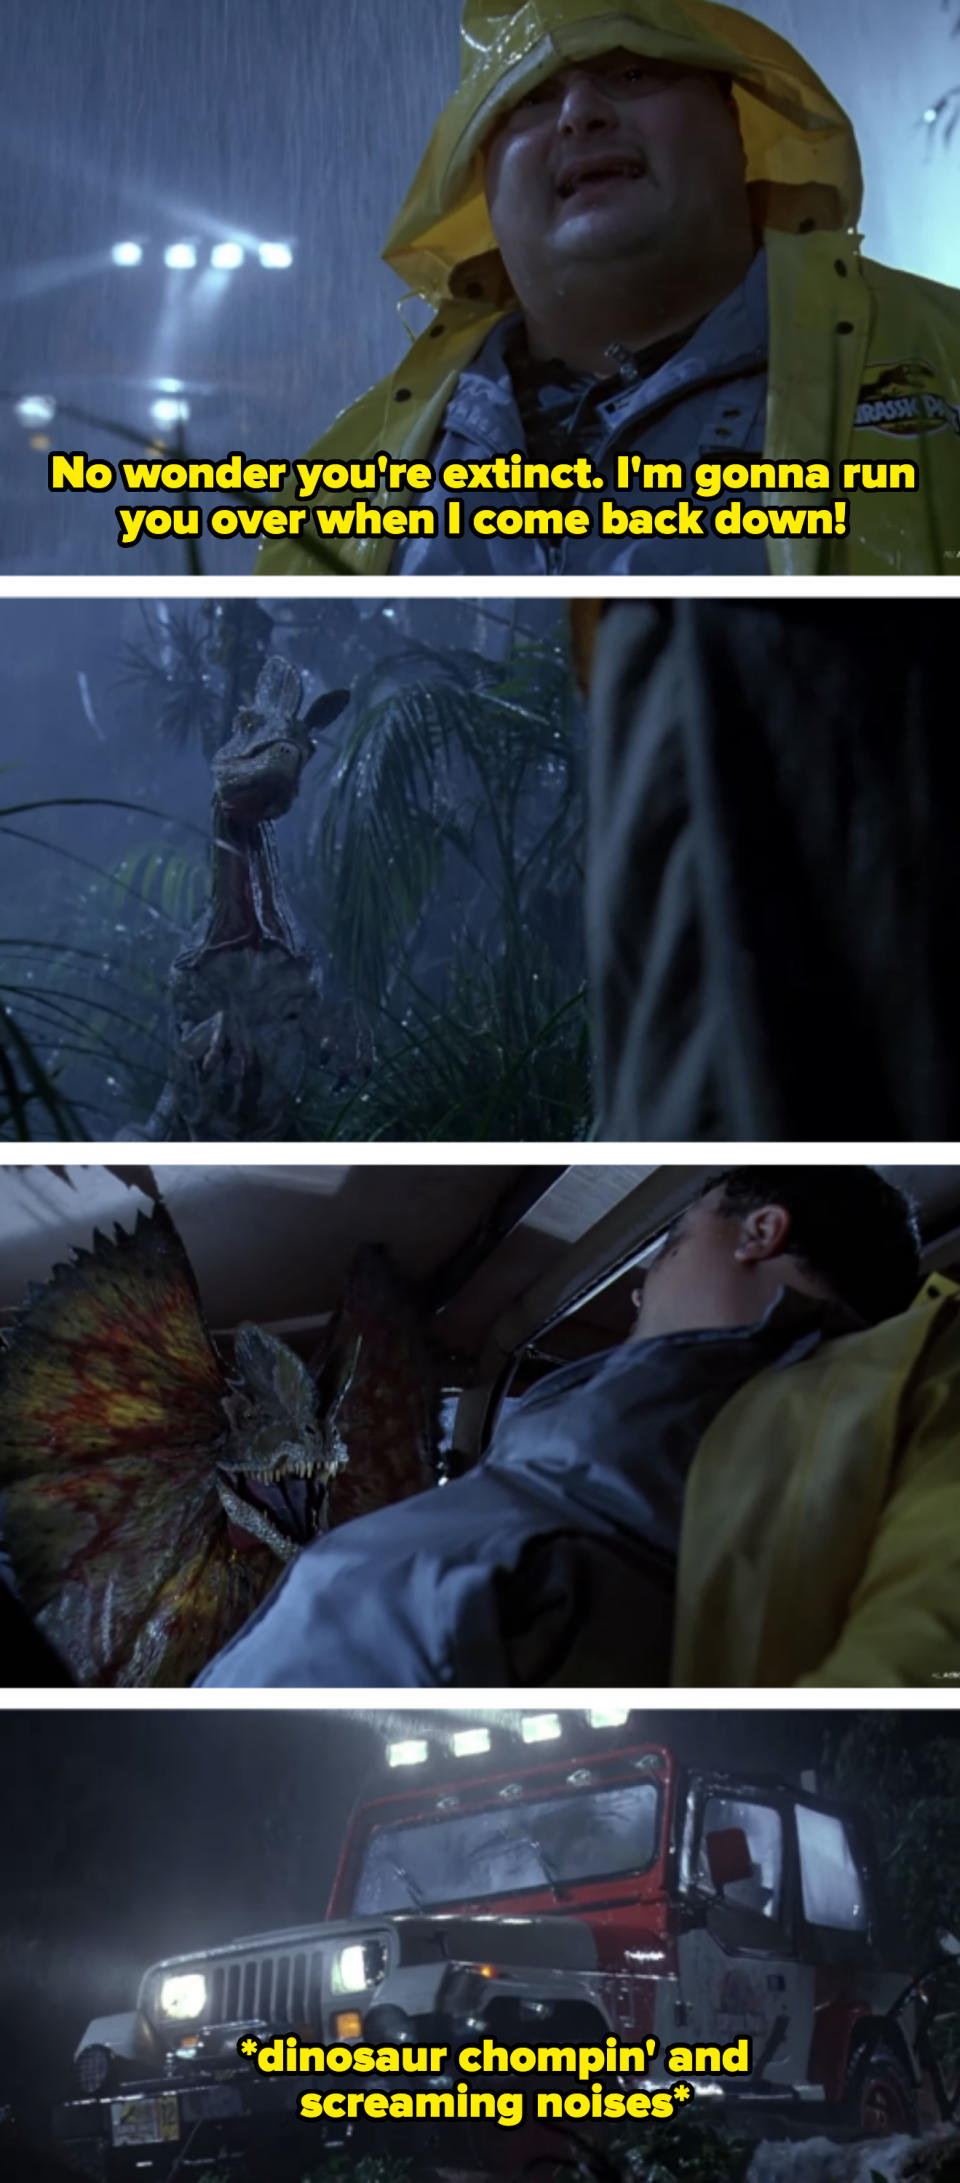 Man in rain gear faces a dinosaur; dinosaur lurks by a vehicle; vehicle's headlights in rain